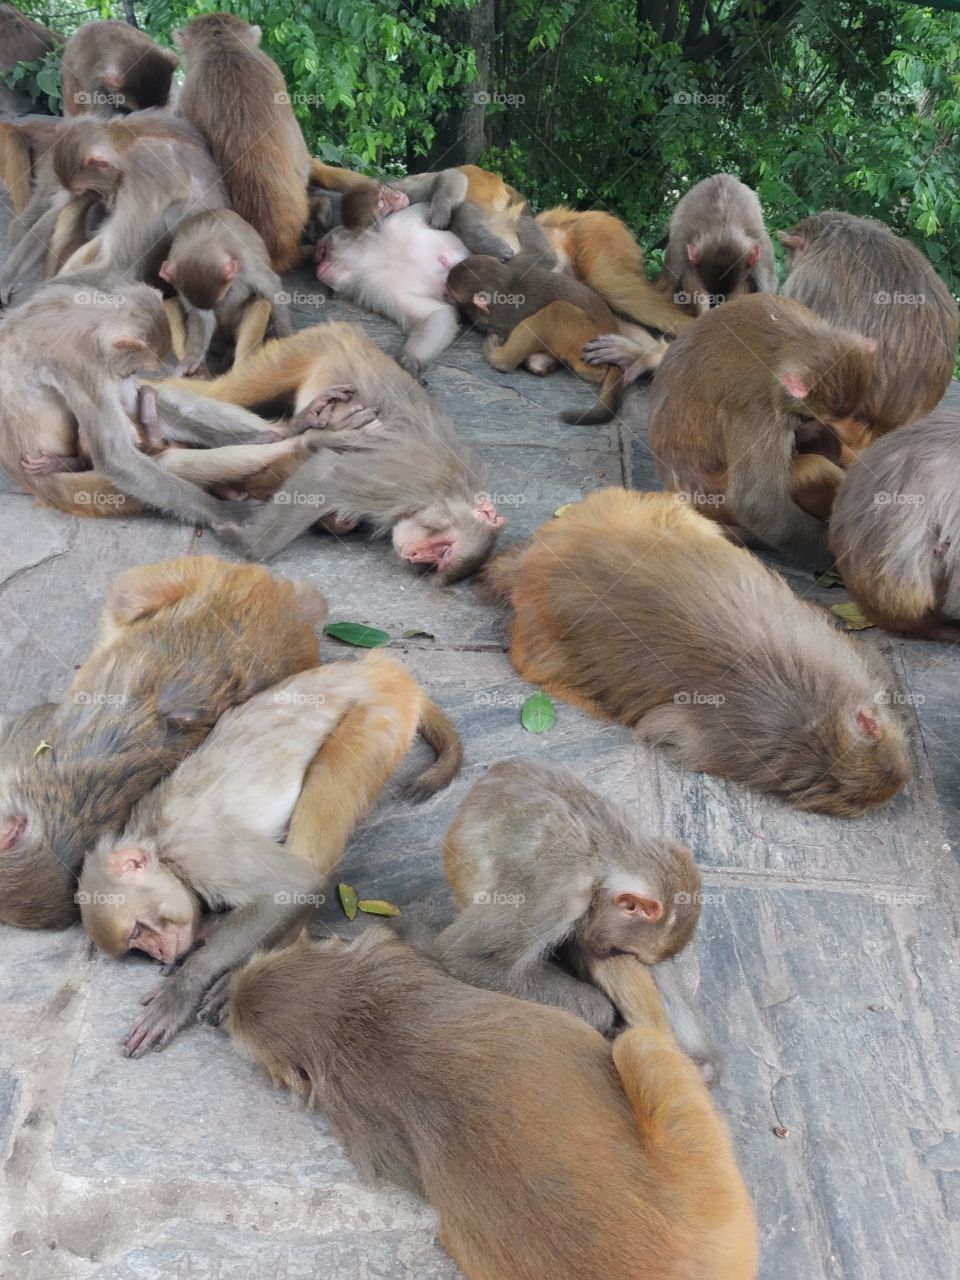 Monkeys sleeping in group